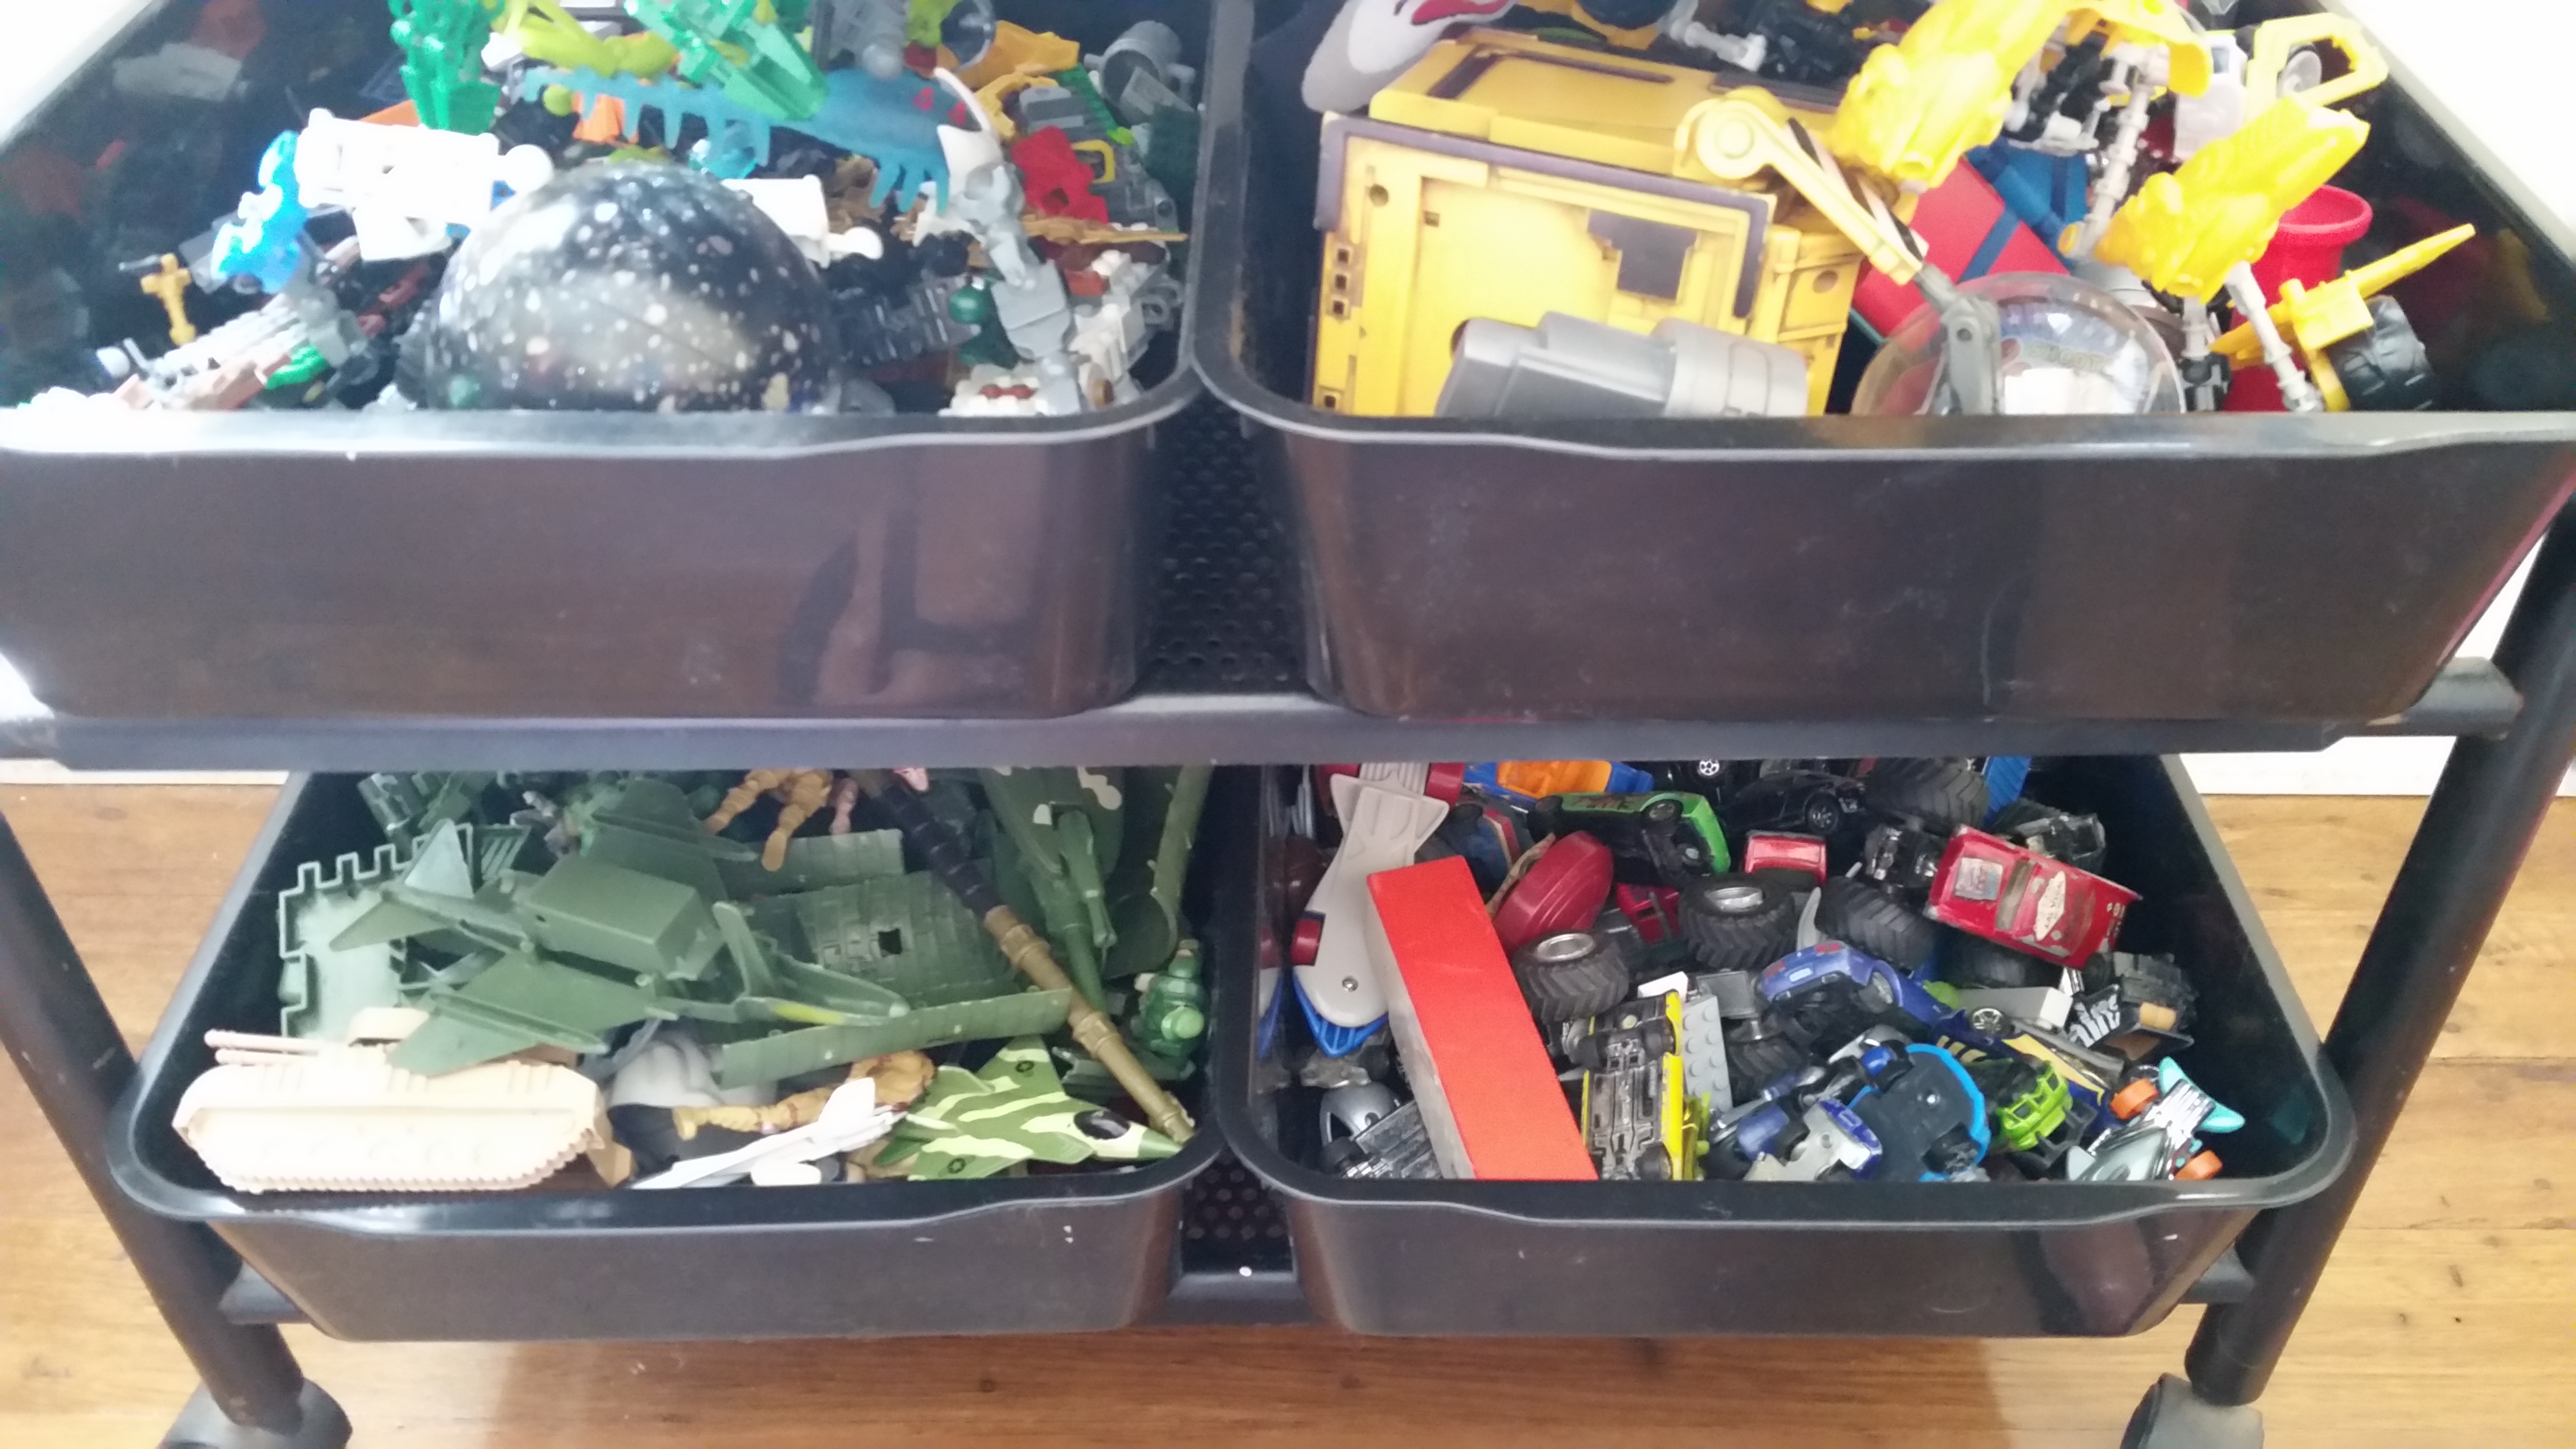 DIY Lego & Toy Storage www.domesblissity.com